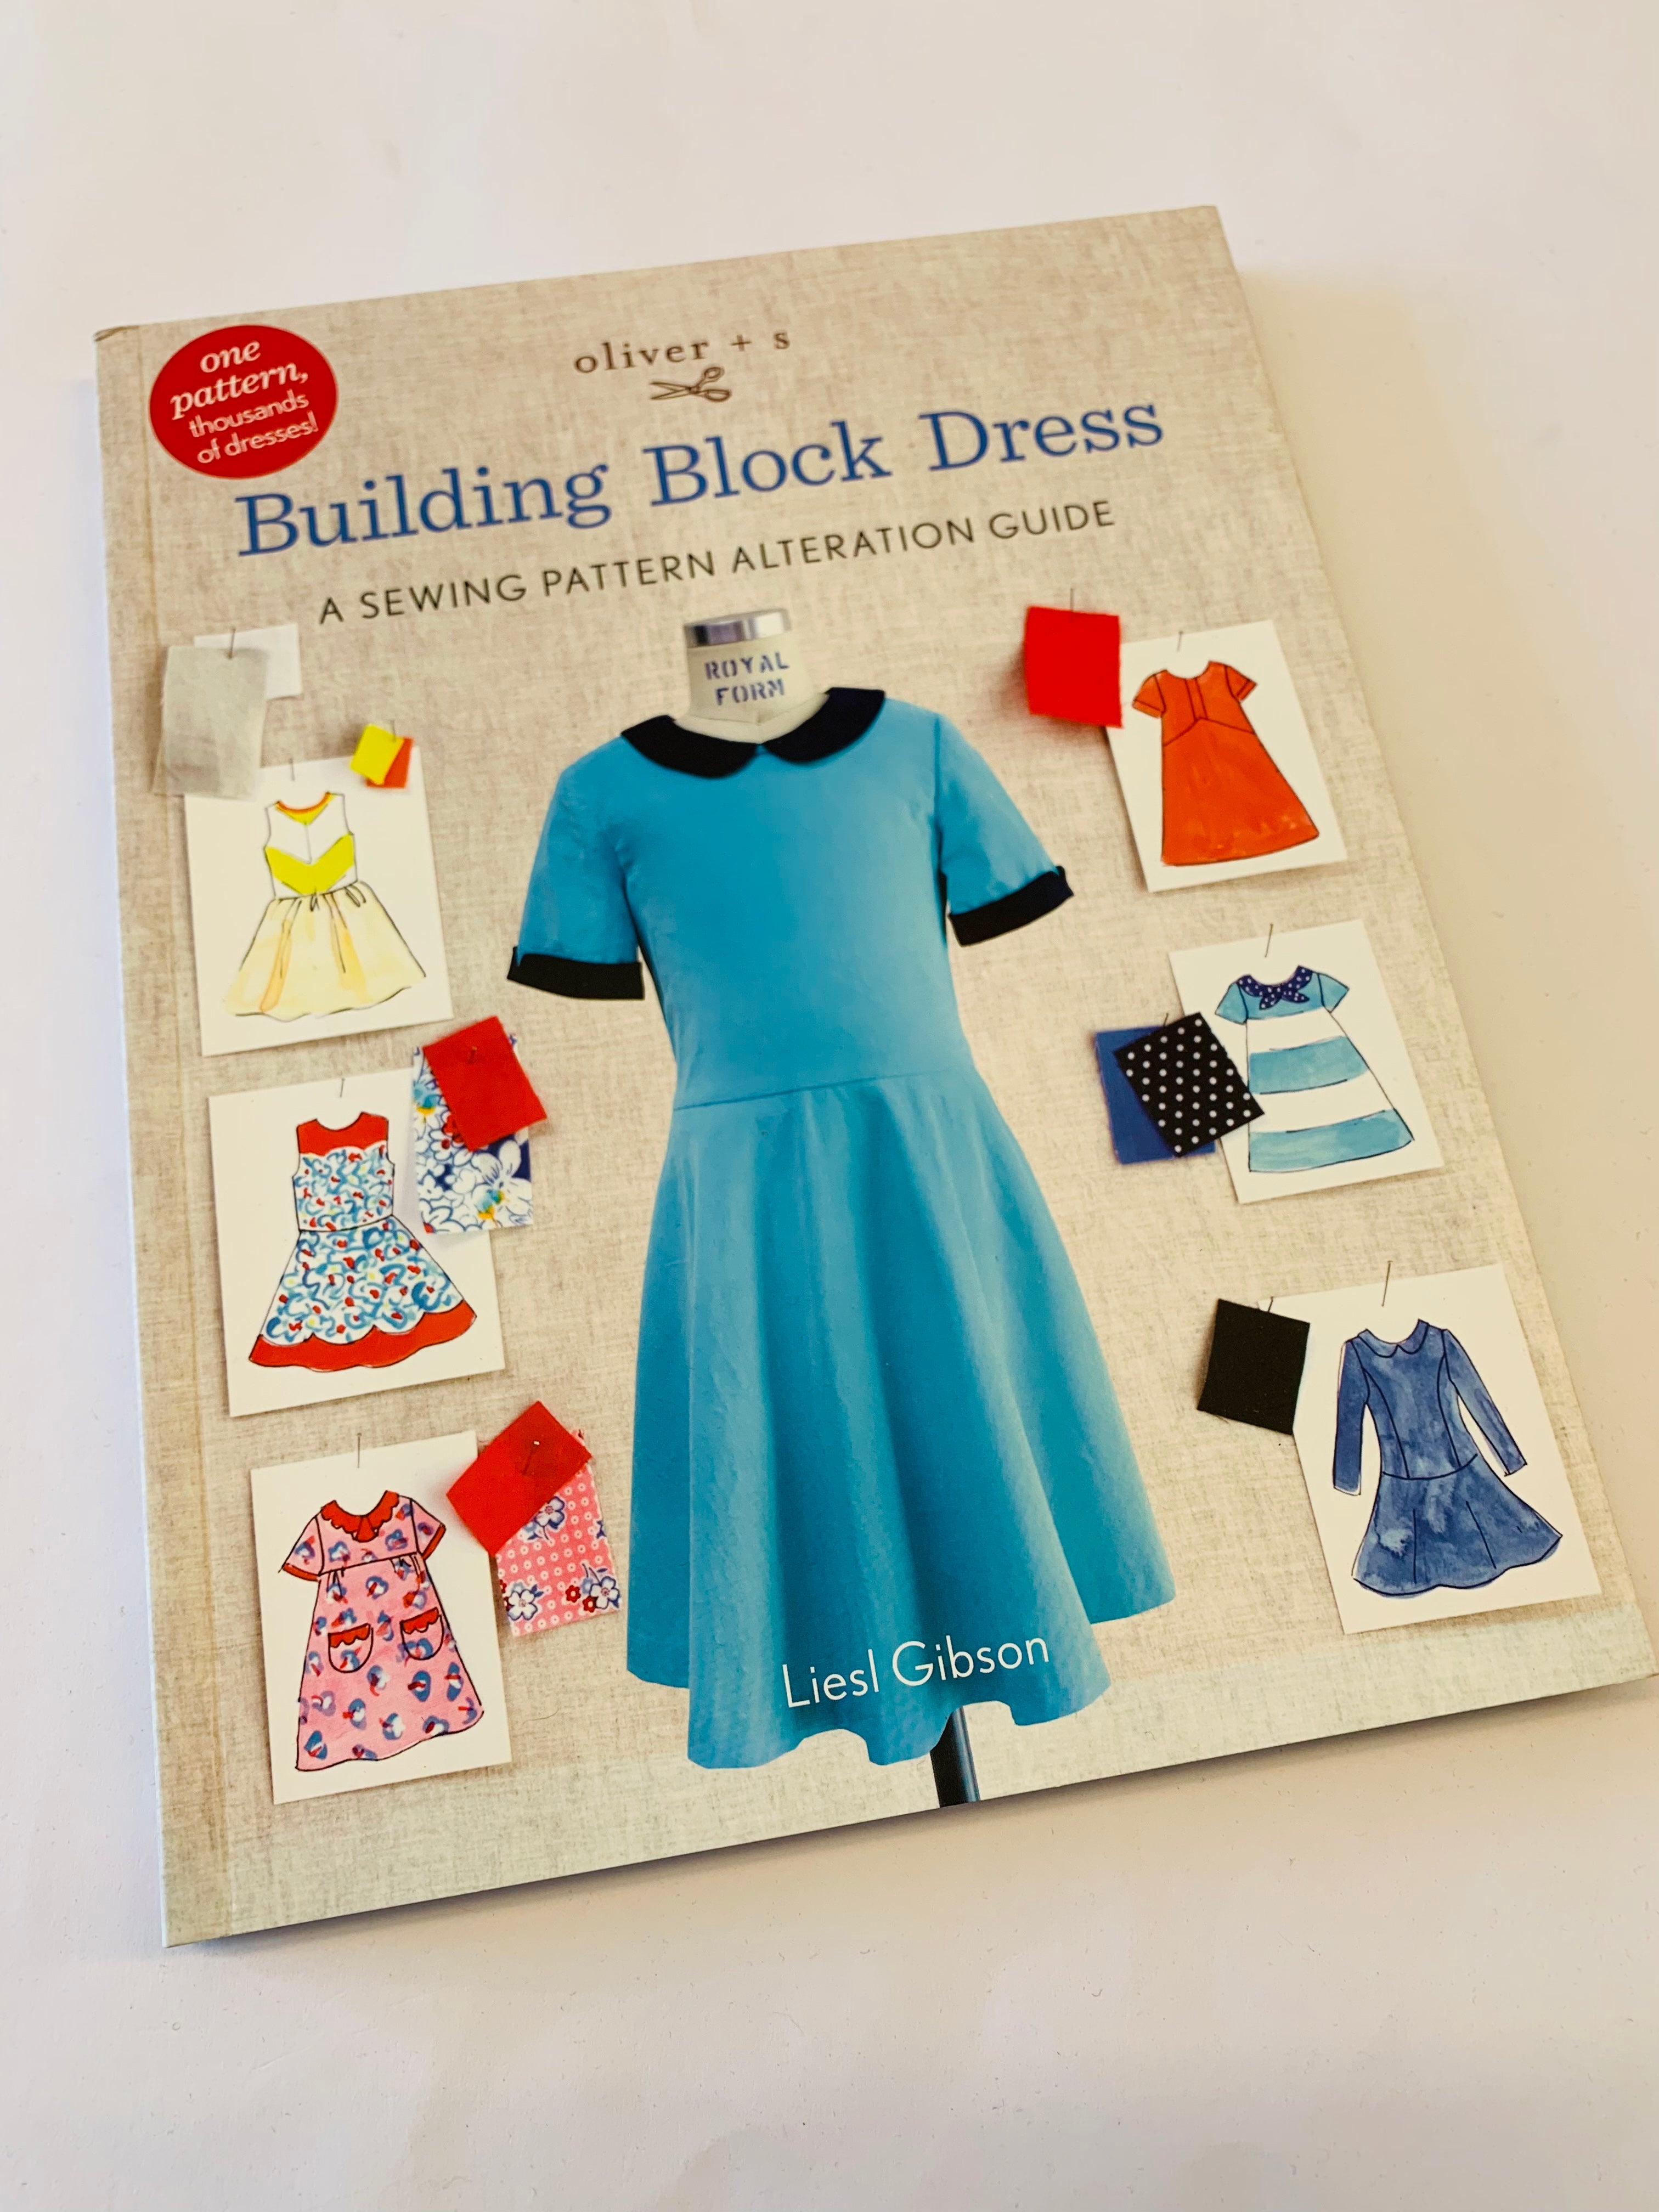 Oliver + S: Building Block Dress book